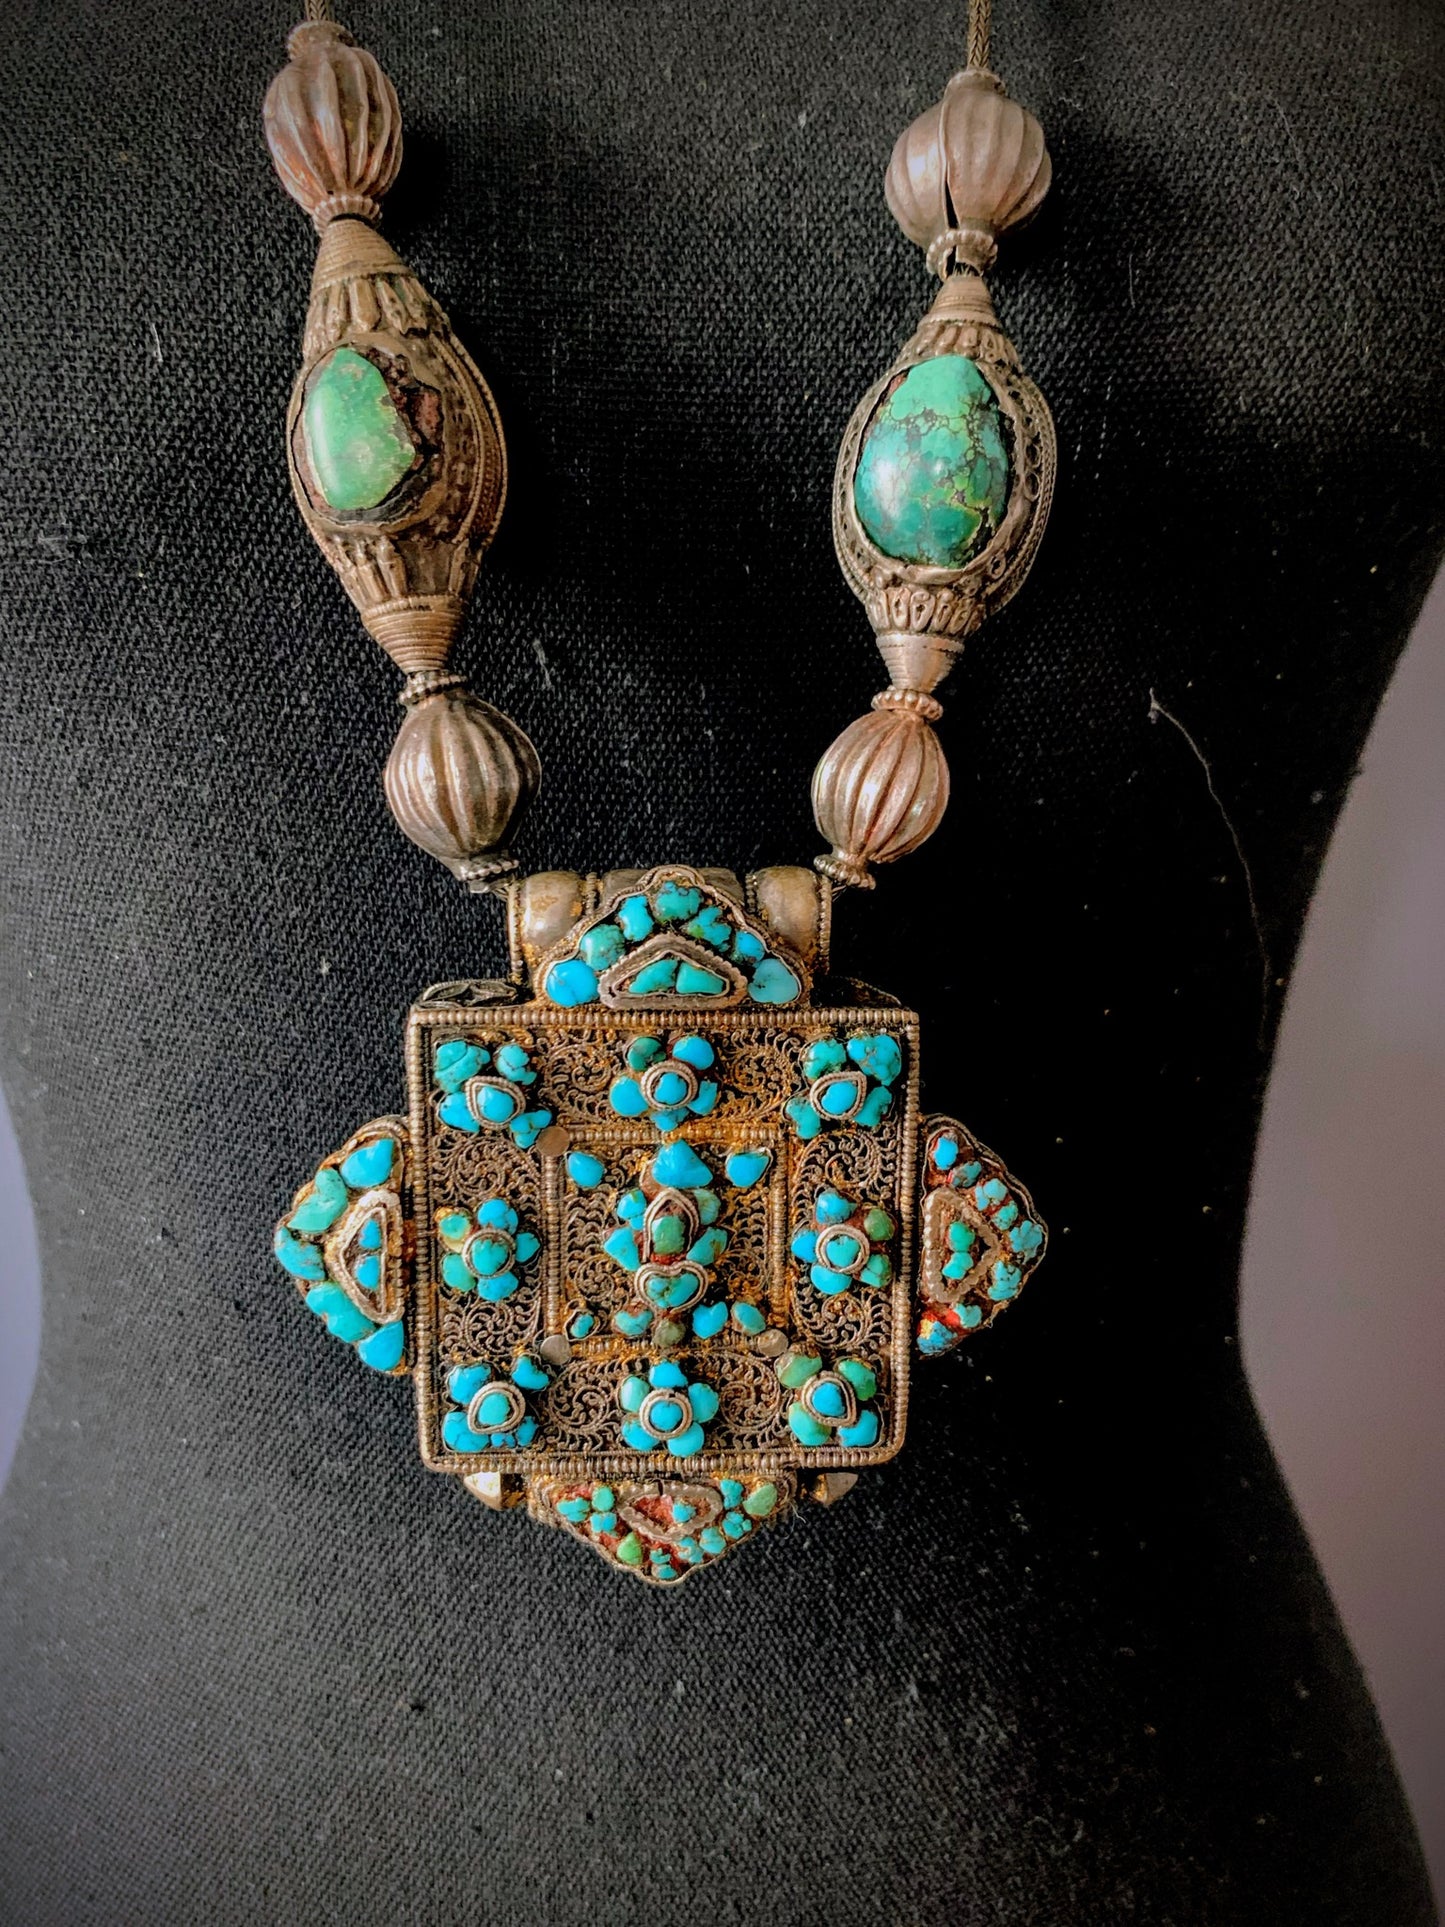 Tibetan Turquoise and silver ghau on a silver chain